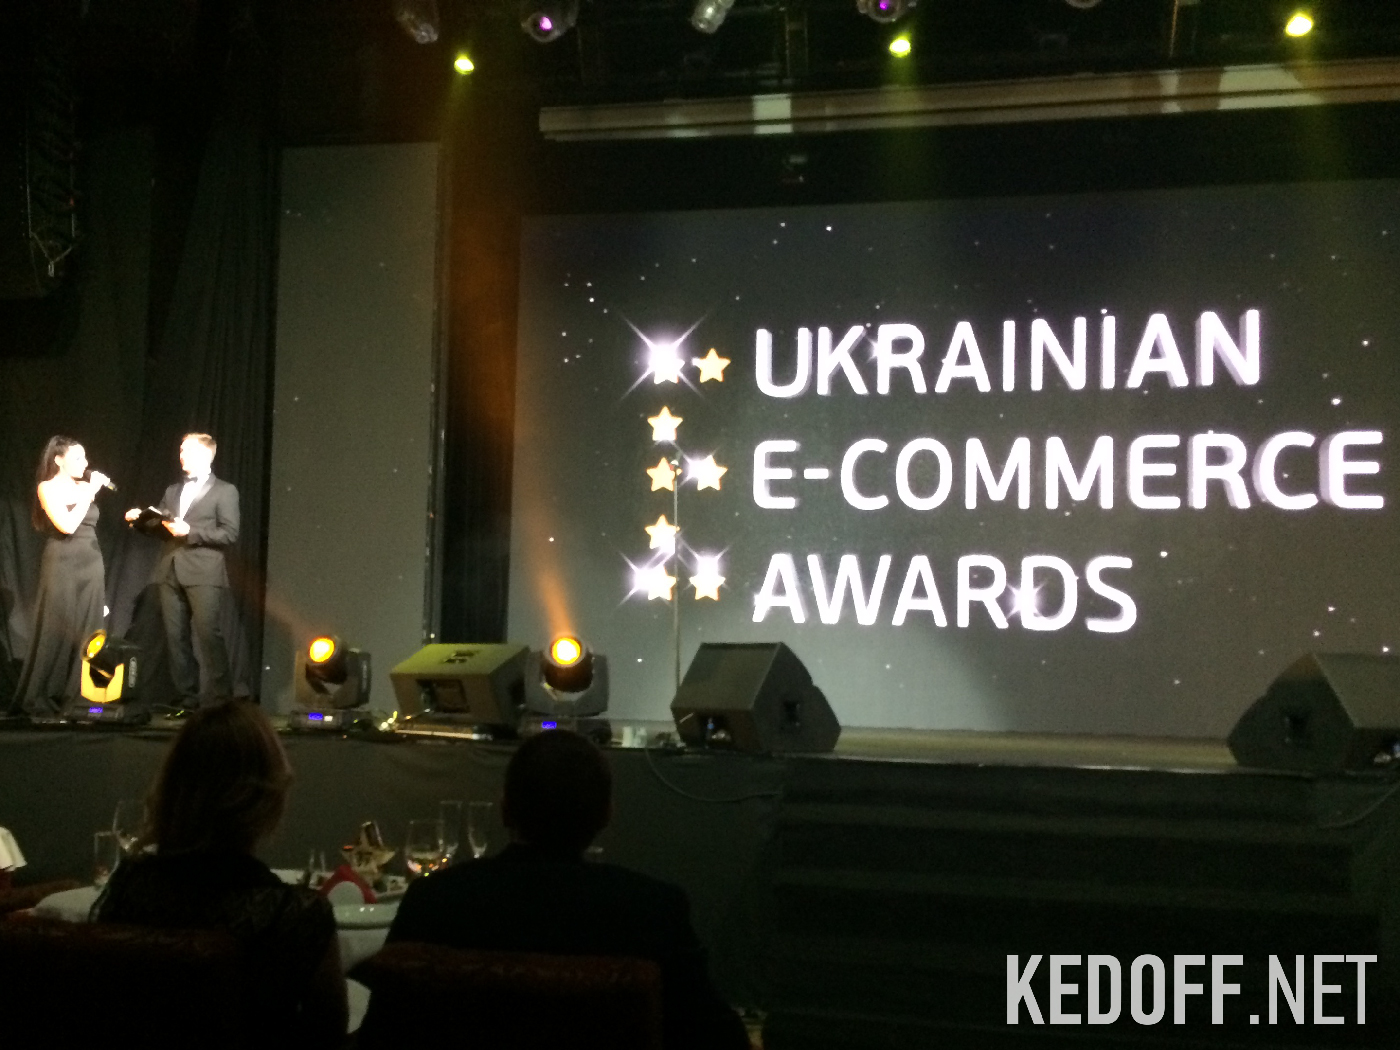 internetowy sklep obuwia kedoff.net online shoes store Kedoff.net Ukrainian E-commerce Awards 2016